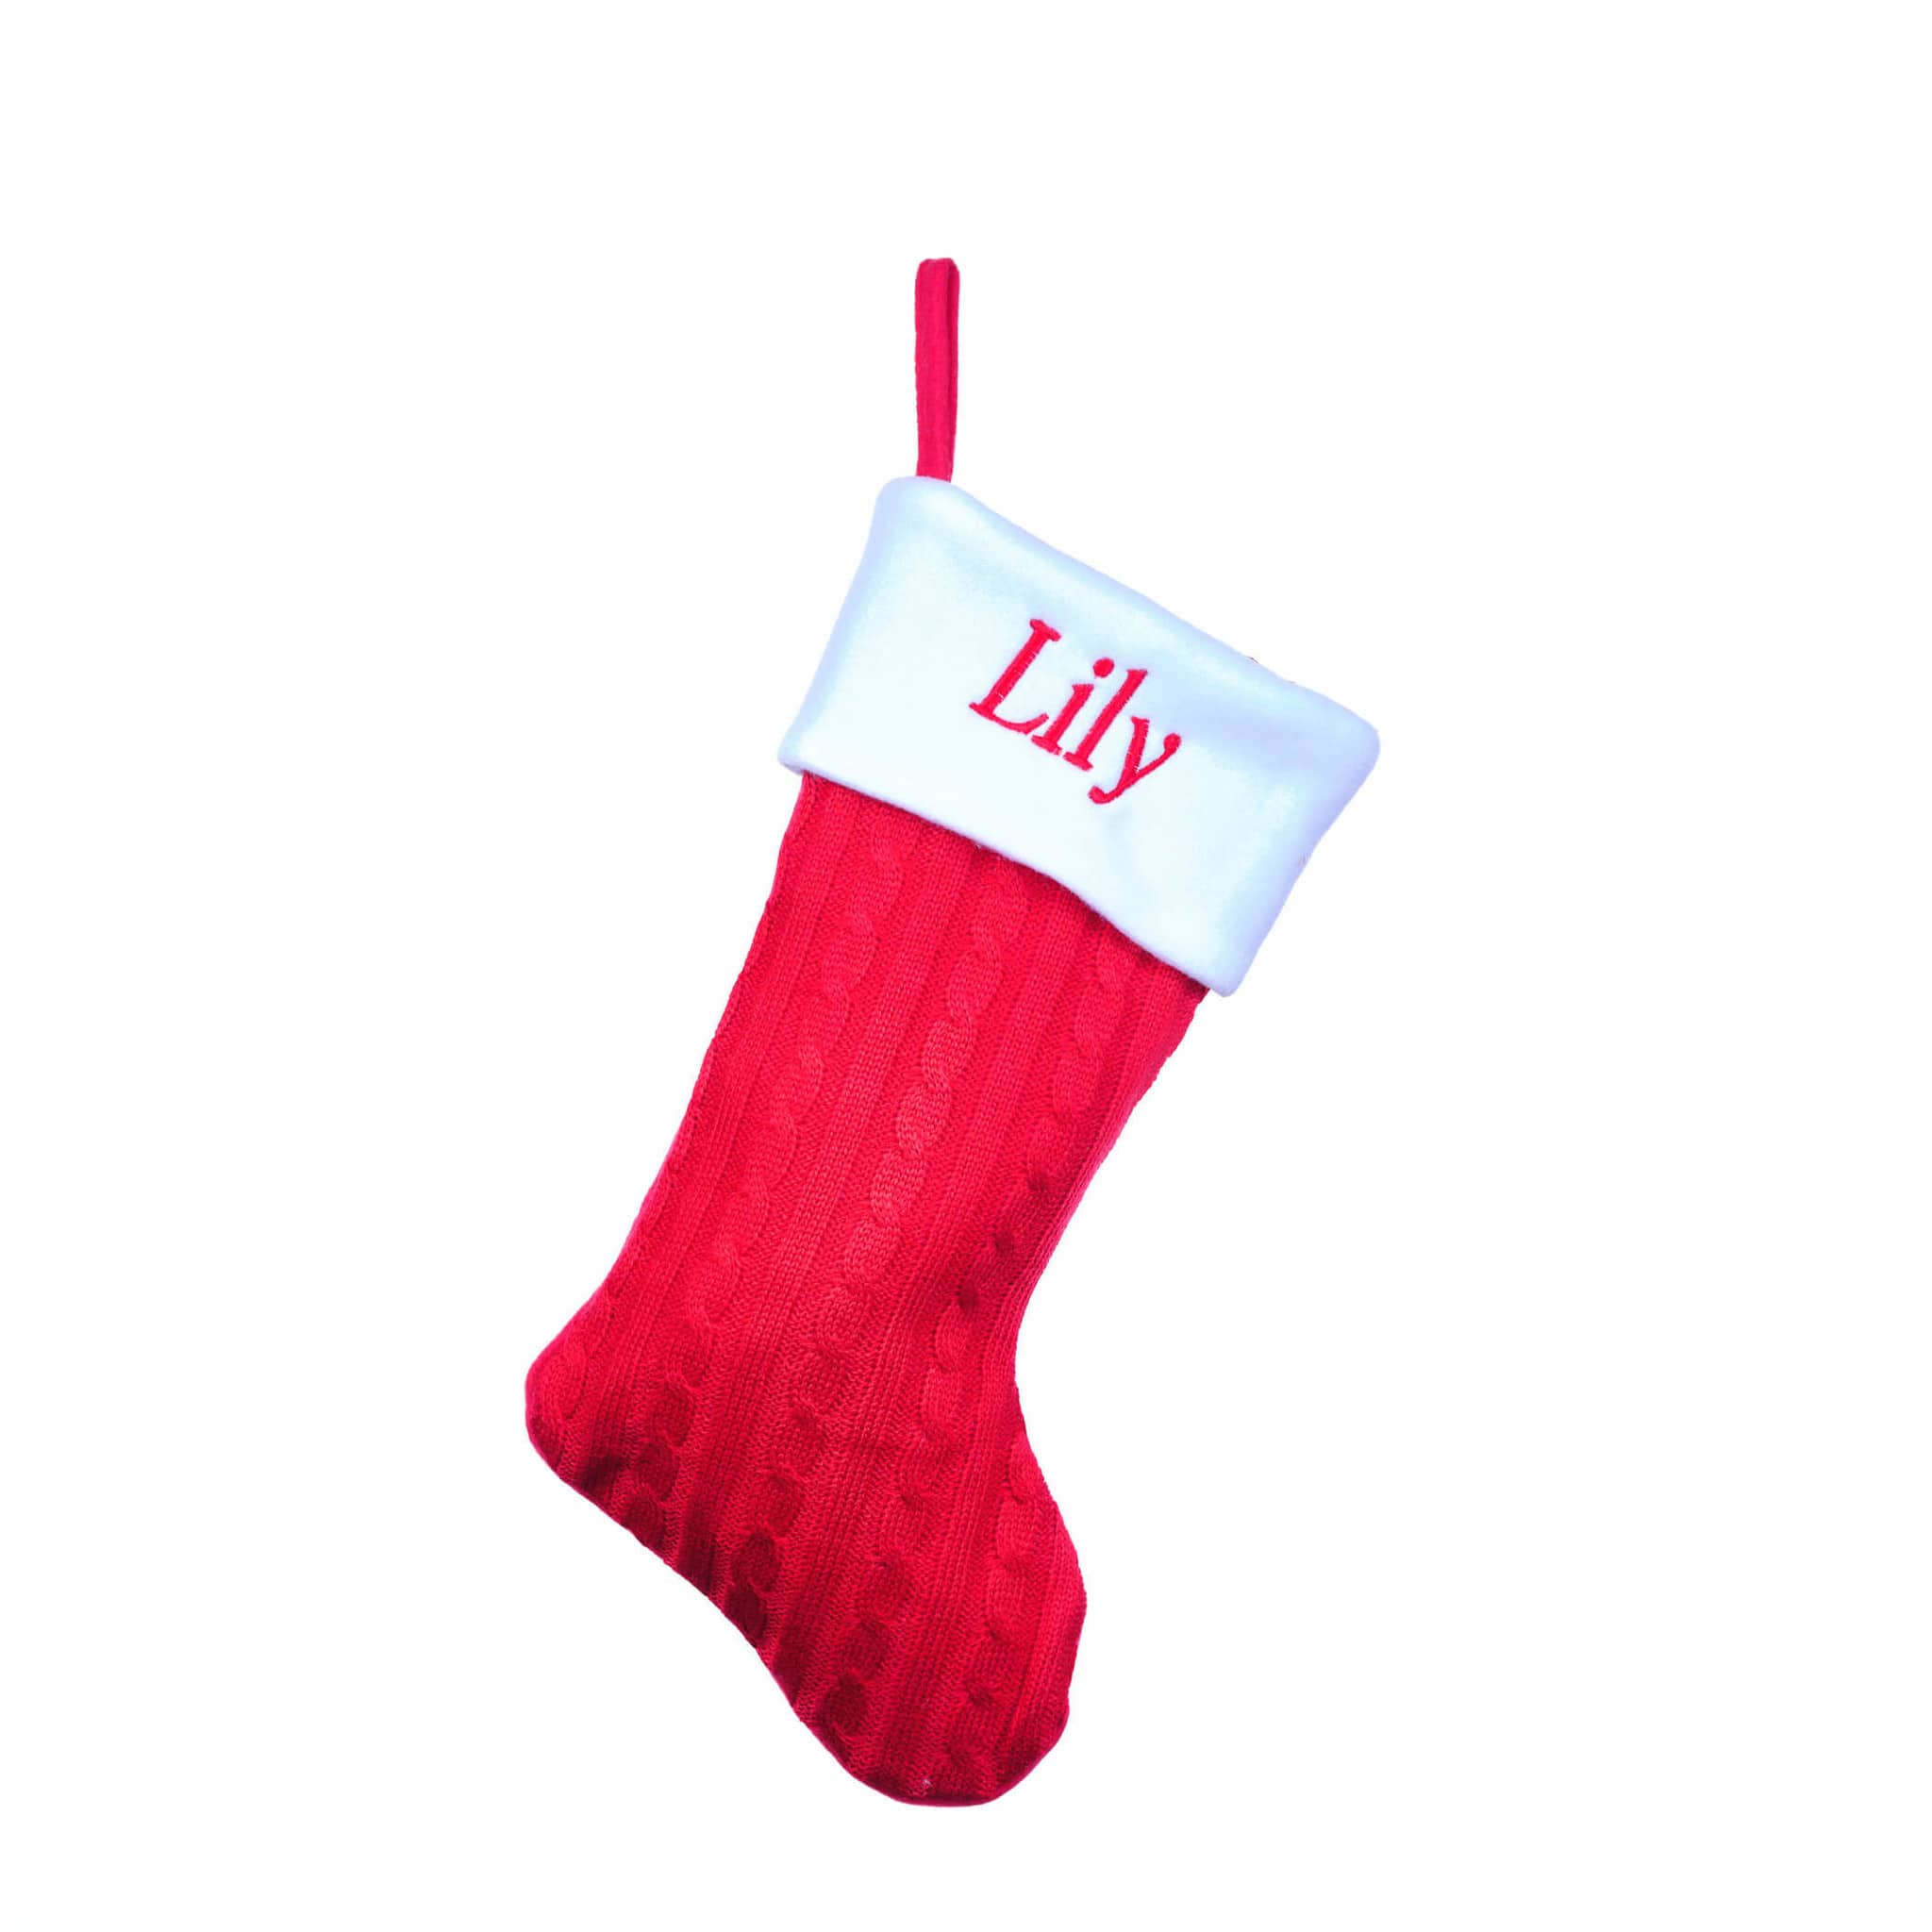 Personalised Red and Grey Knit Christmas Stockings | UK, Ireland